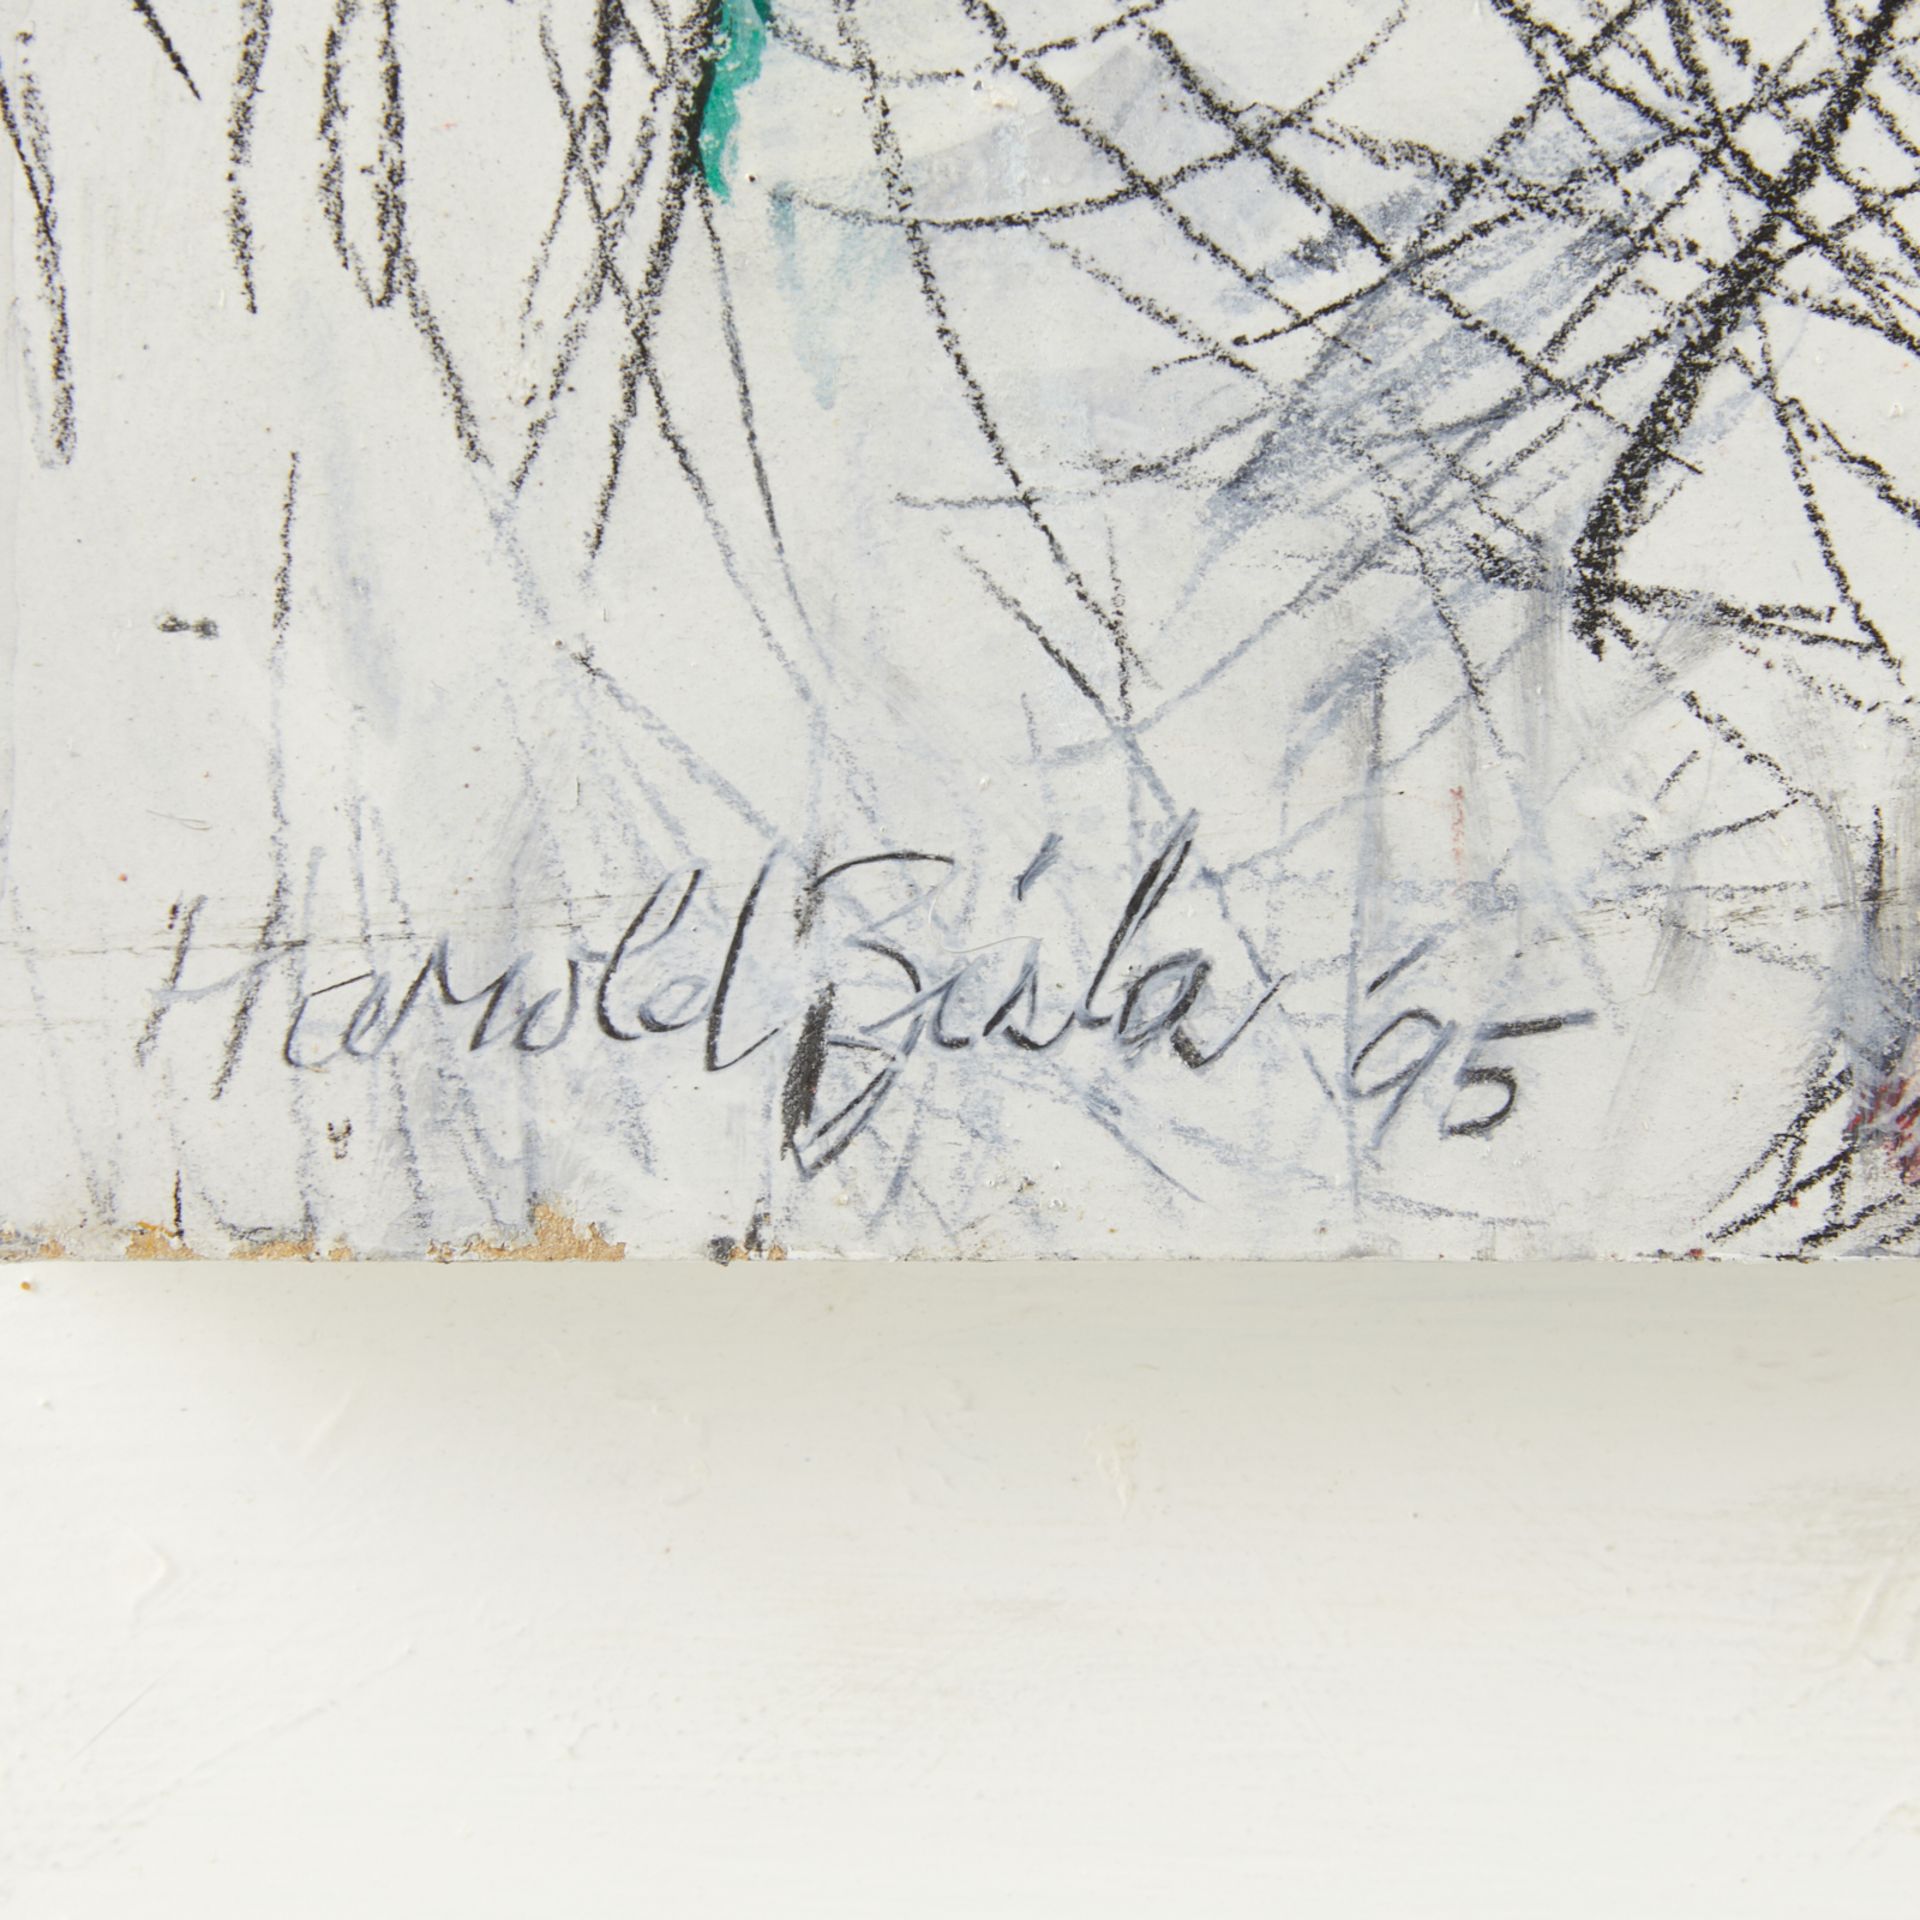 Harold Zisla "Interruptus" Abstract Painting - Image 2 of 8